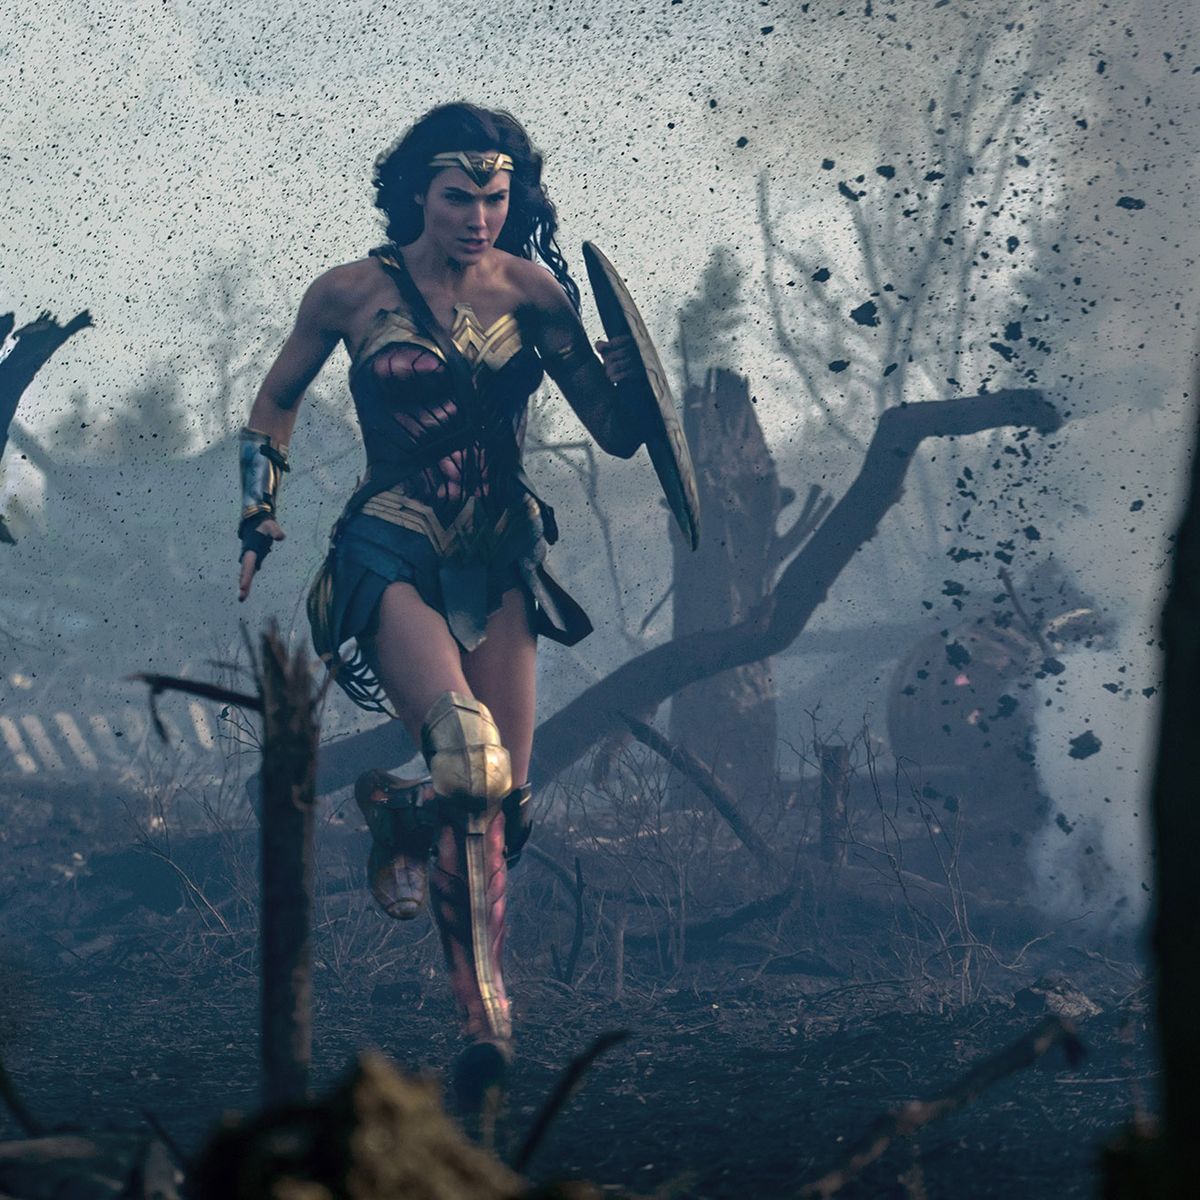 Wonder Woman Is Not Live Service, Warner Bros. Confirms - Insider